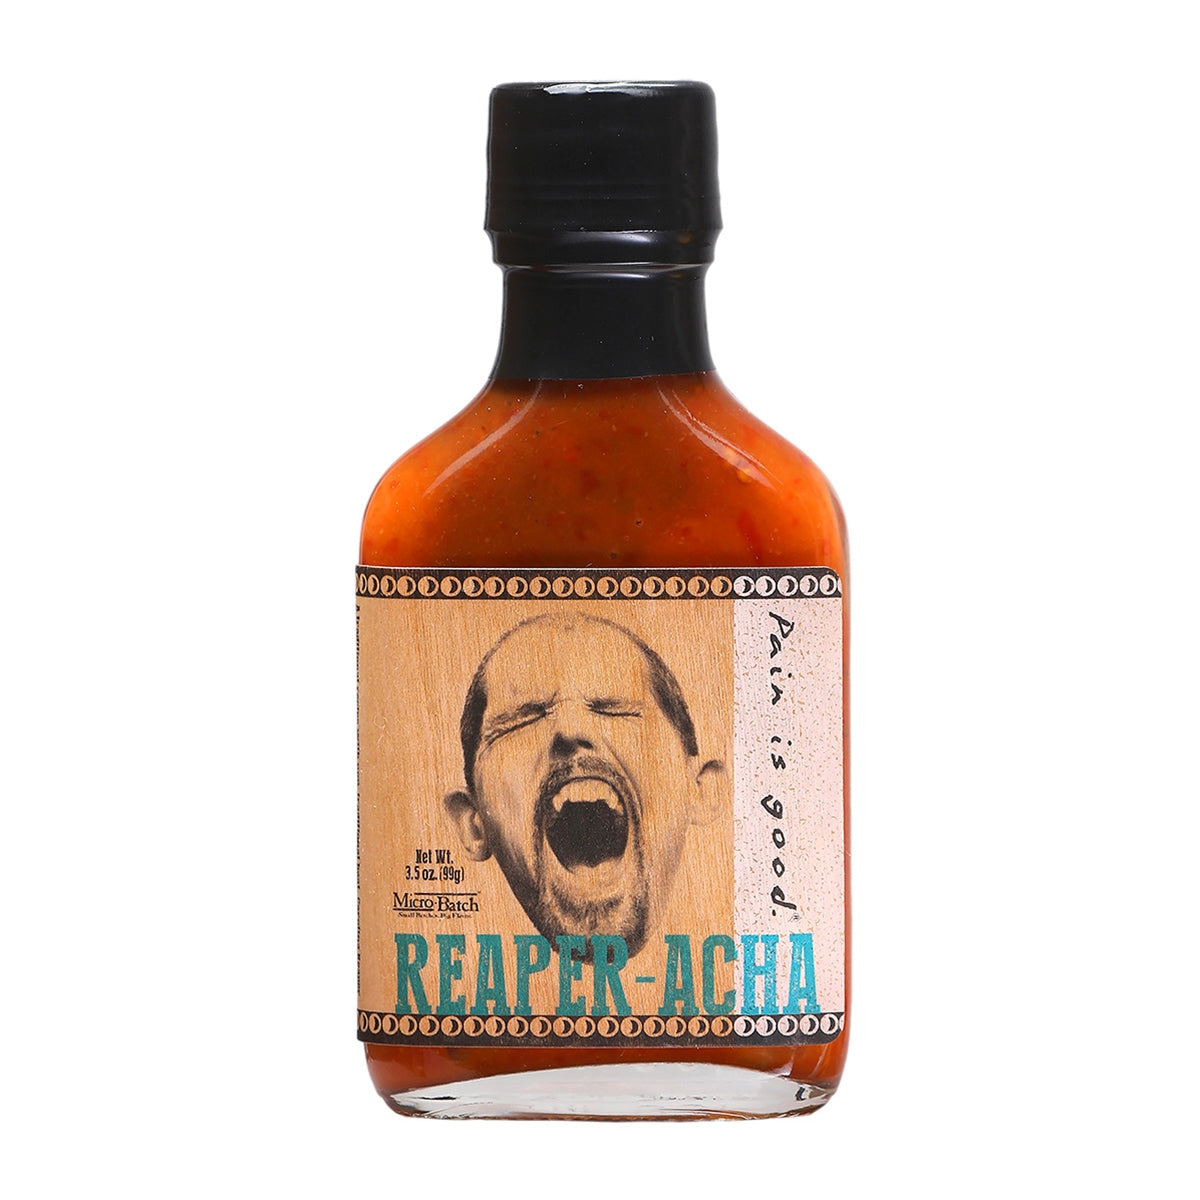 Hot Sauce Pain Is Good Reaper-acha 3.5 oz Flask Heat 9